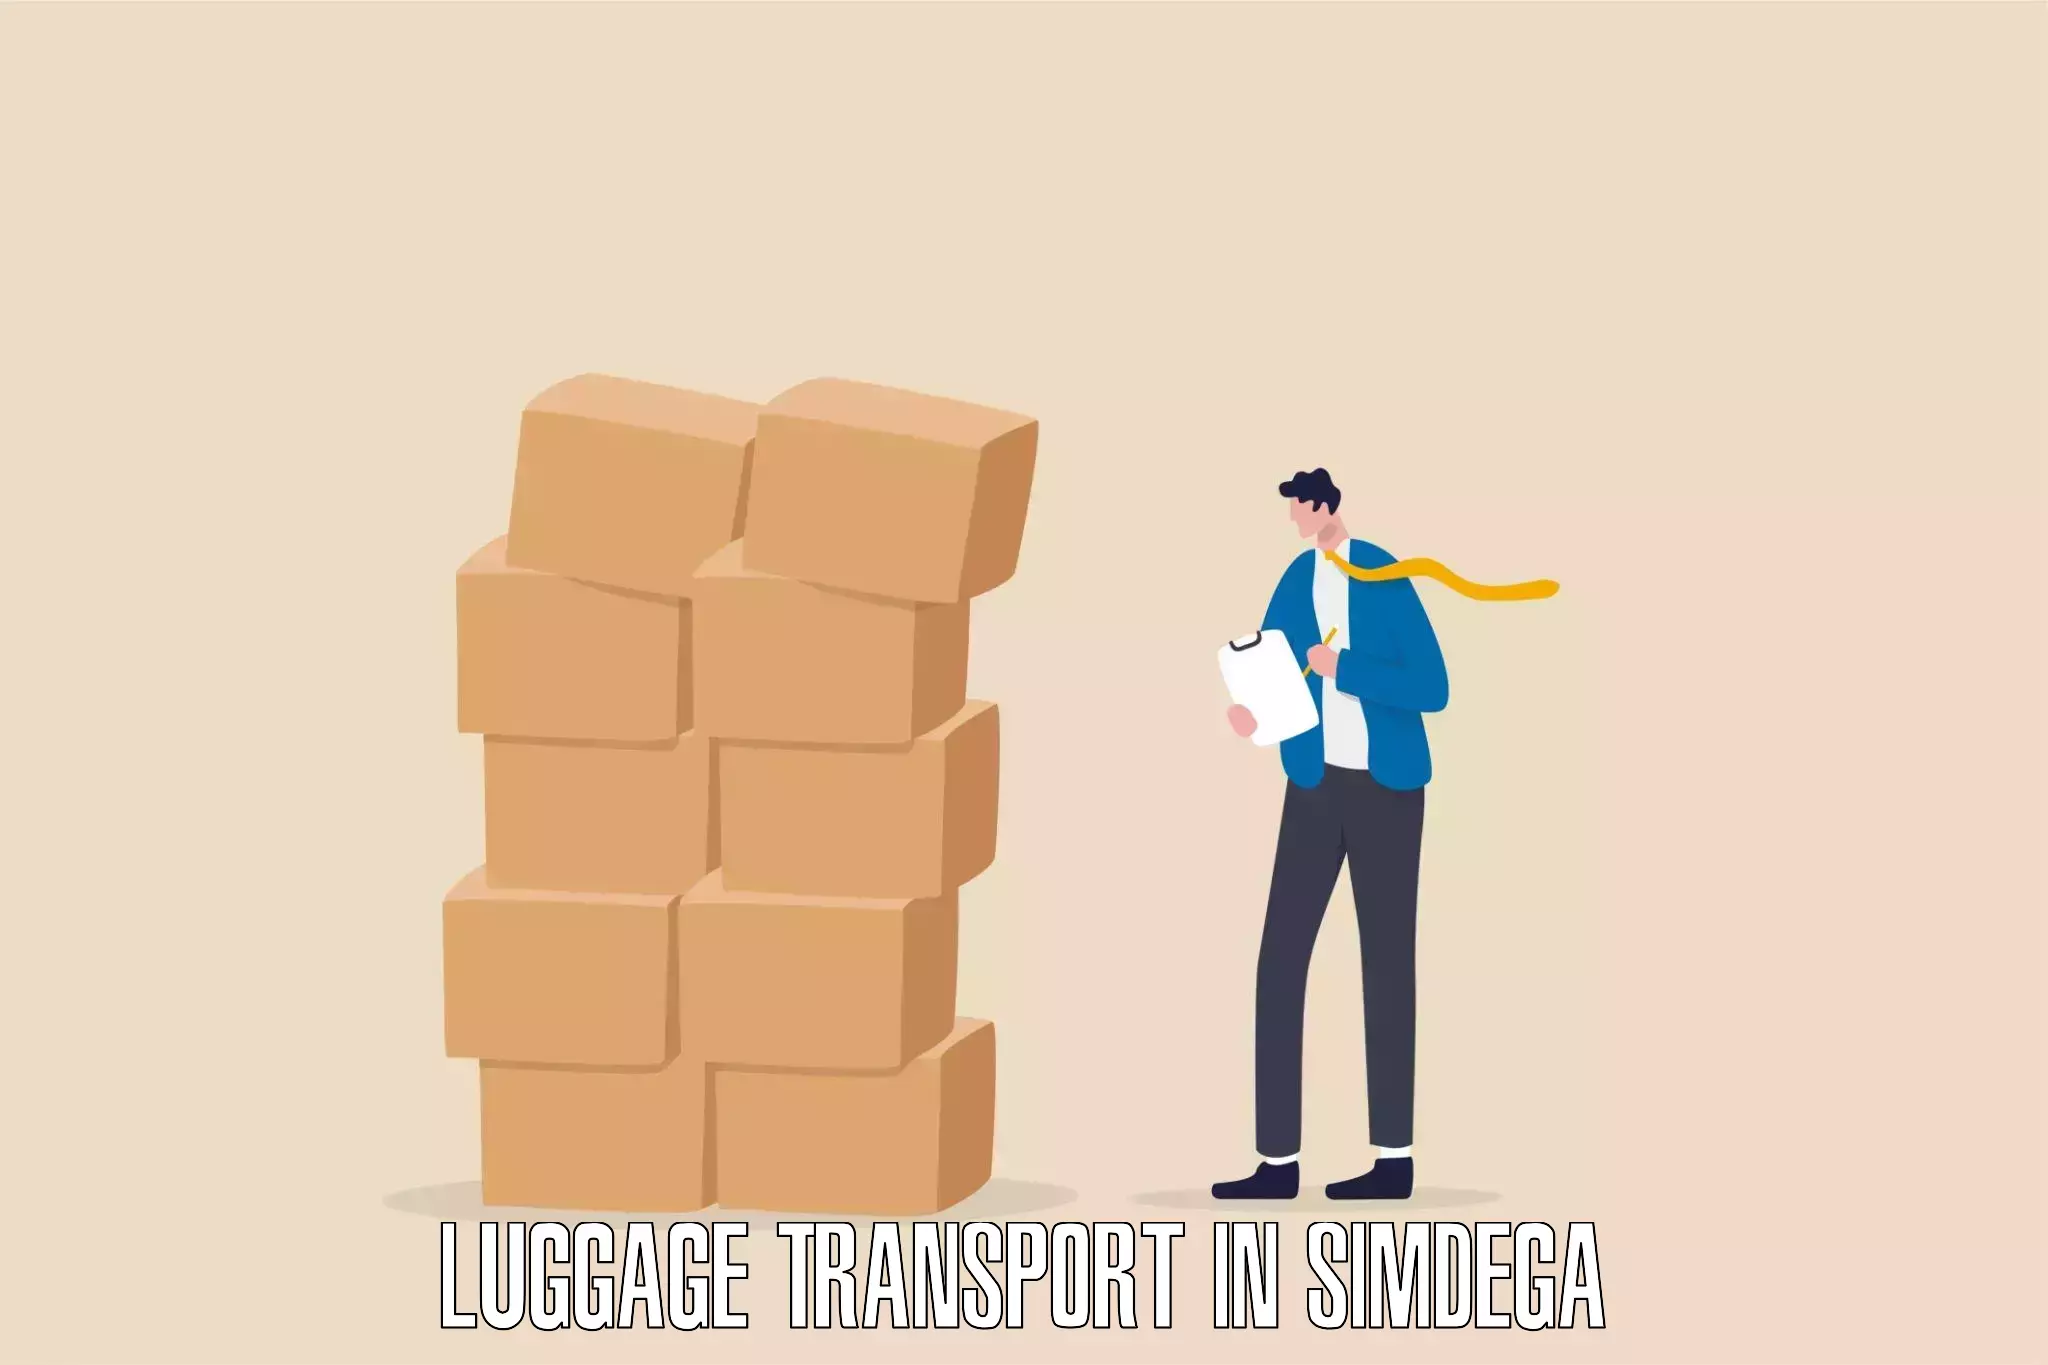 Luggage shipment strategy in Simdega